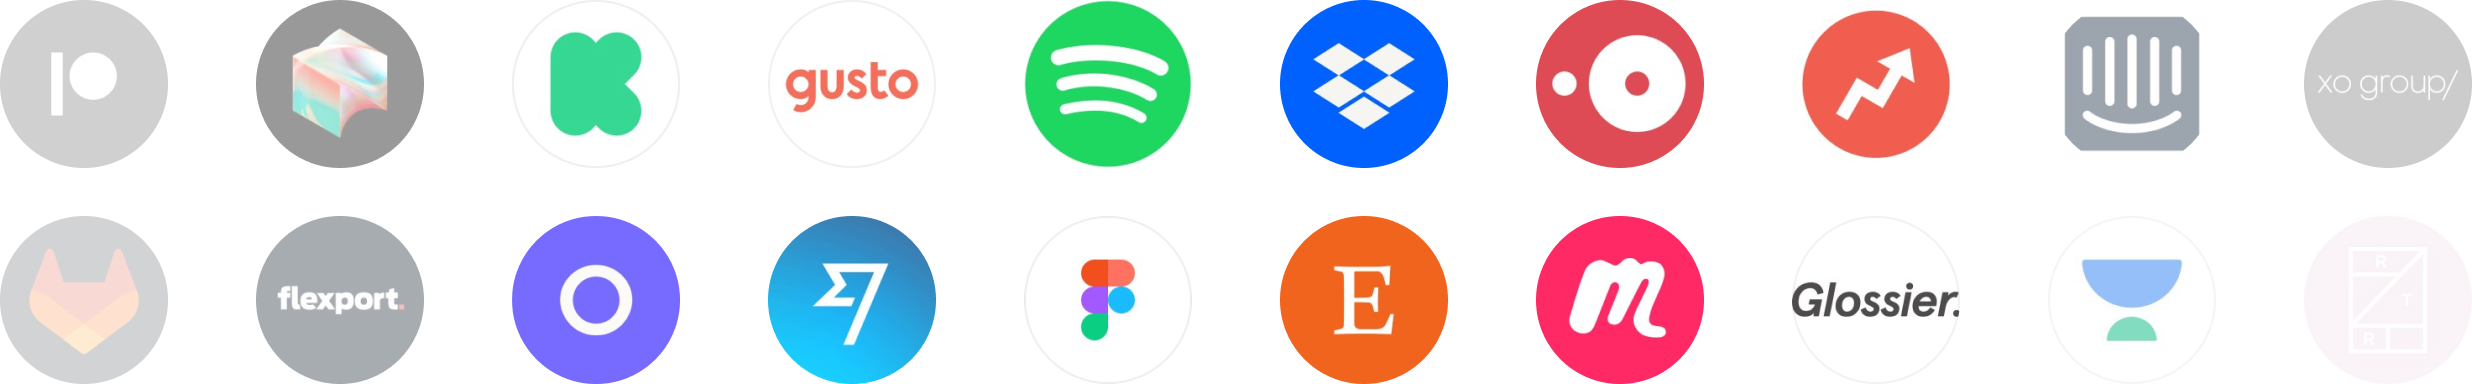 logos of companies